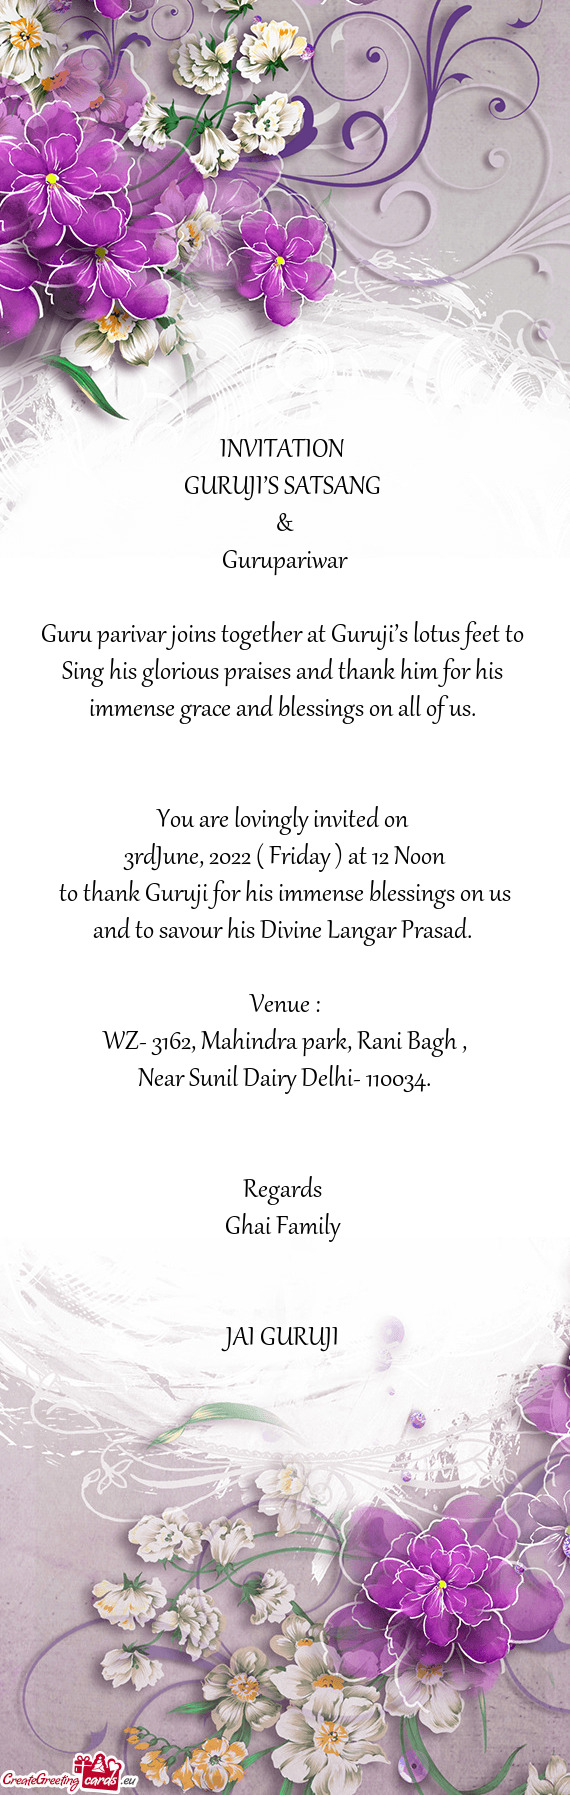 Guru parivar joins together at Guruji’s lotus feet to